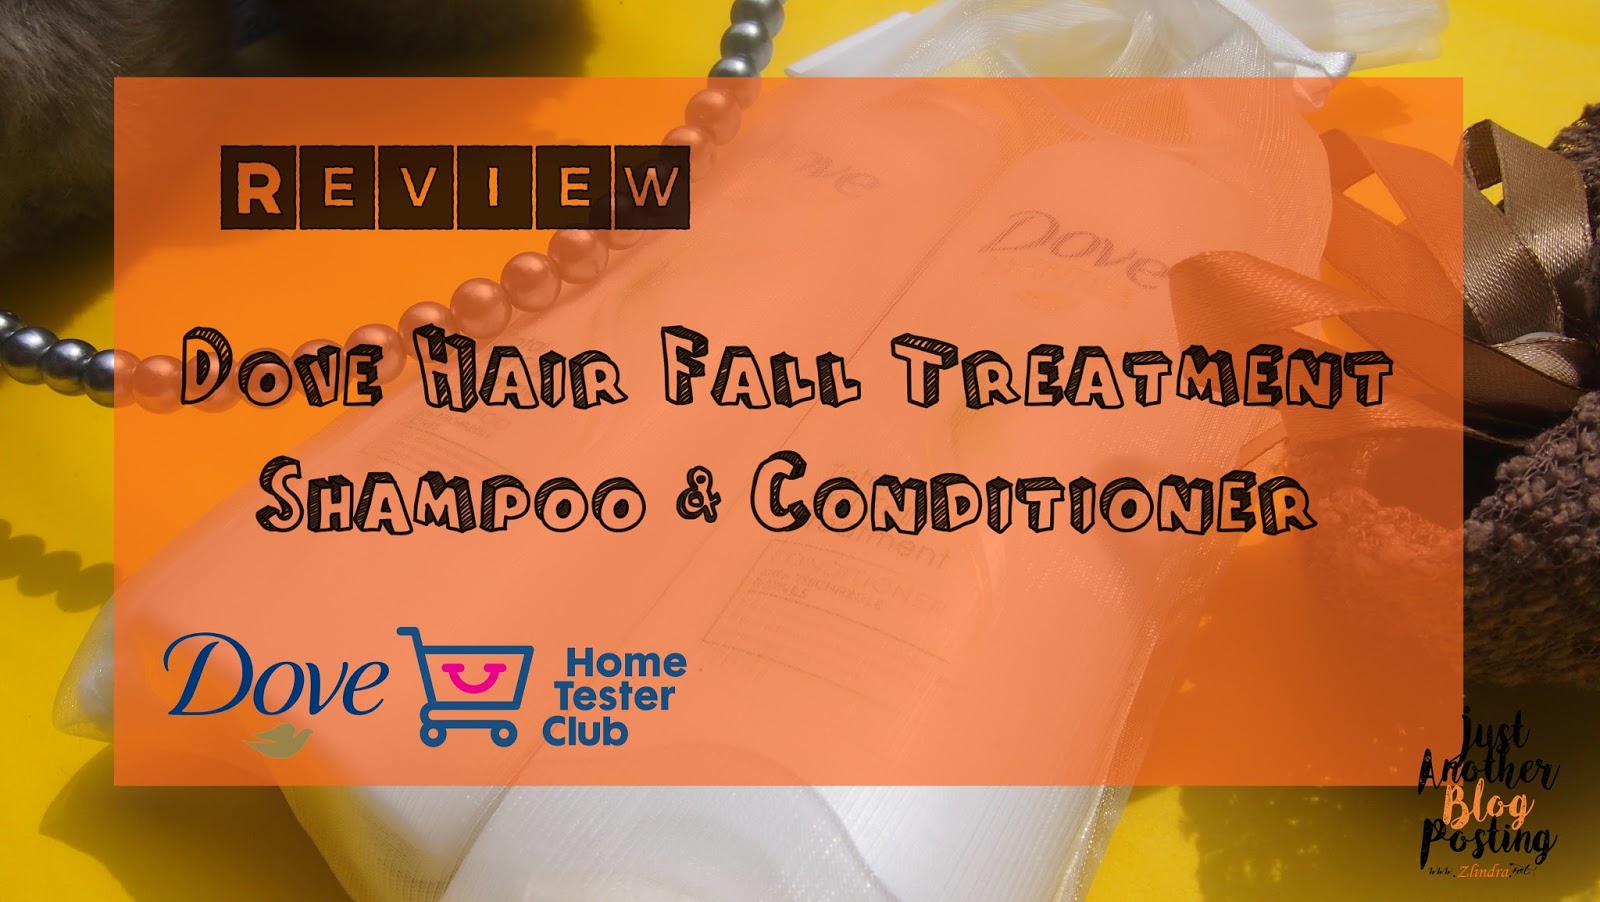 Cara Mengatasi Rambut Rontok Review Dove Hair Fall Treatment